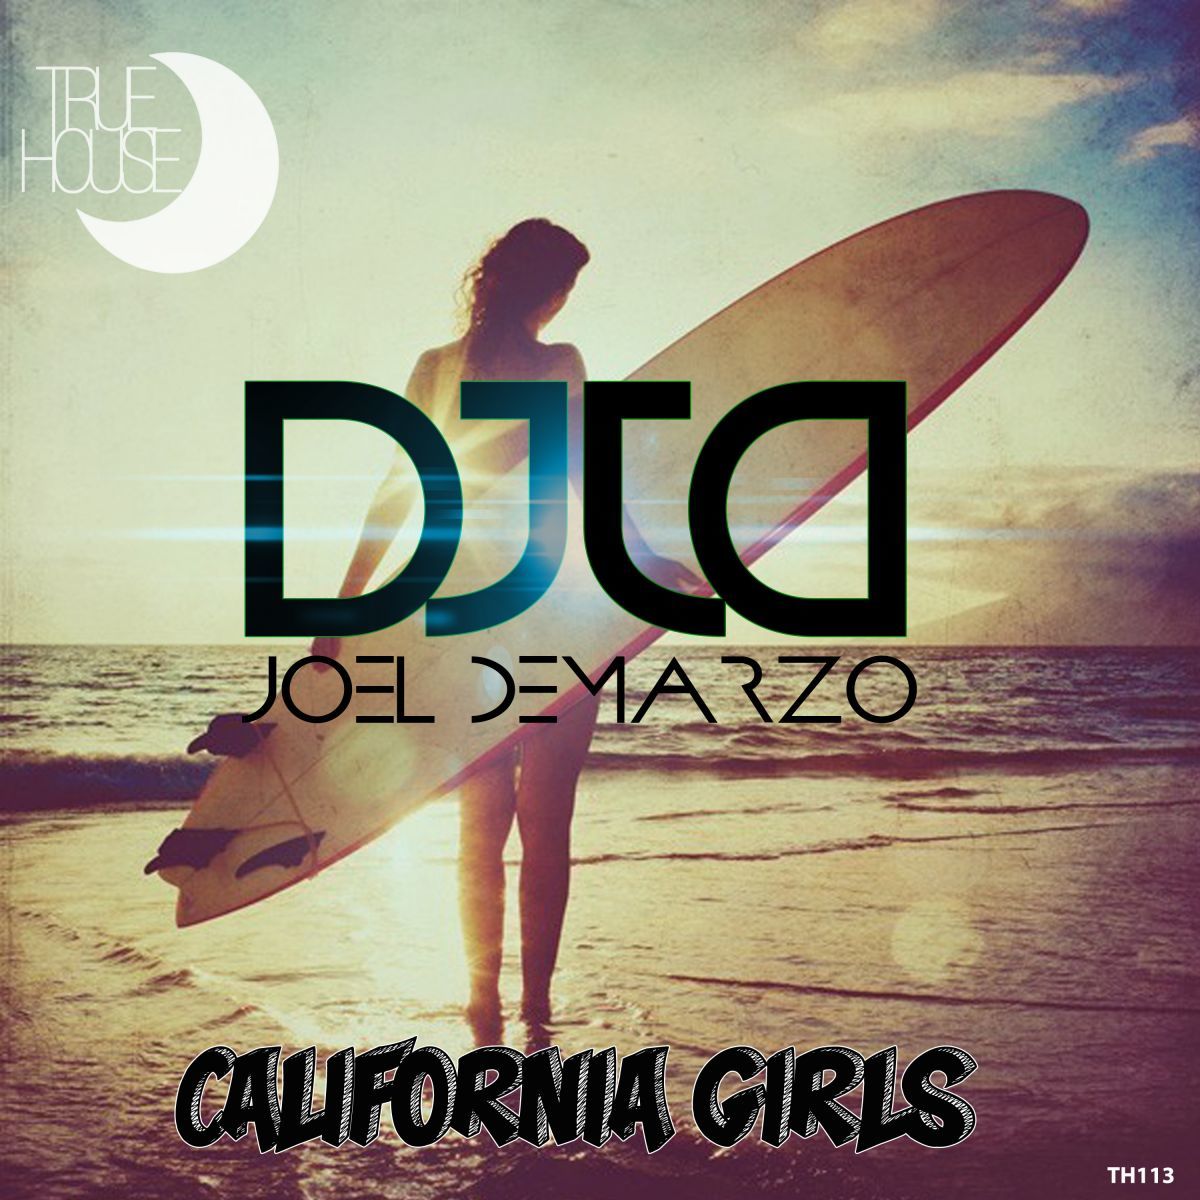 Joel DeMarzo - California Girls / True House LA